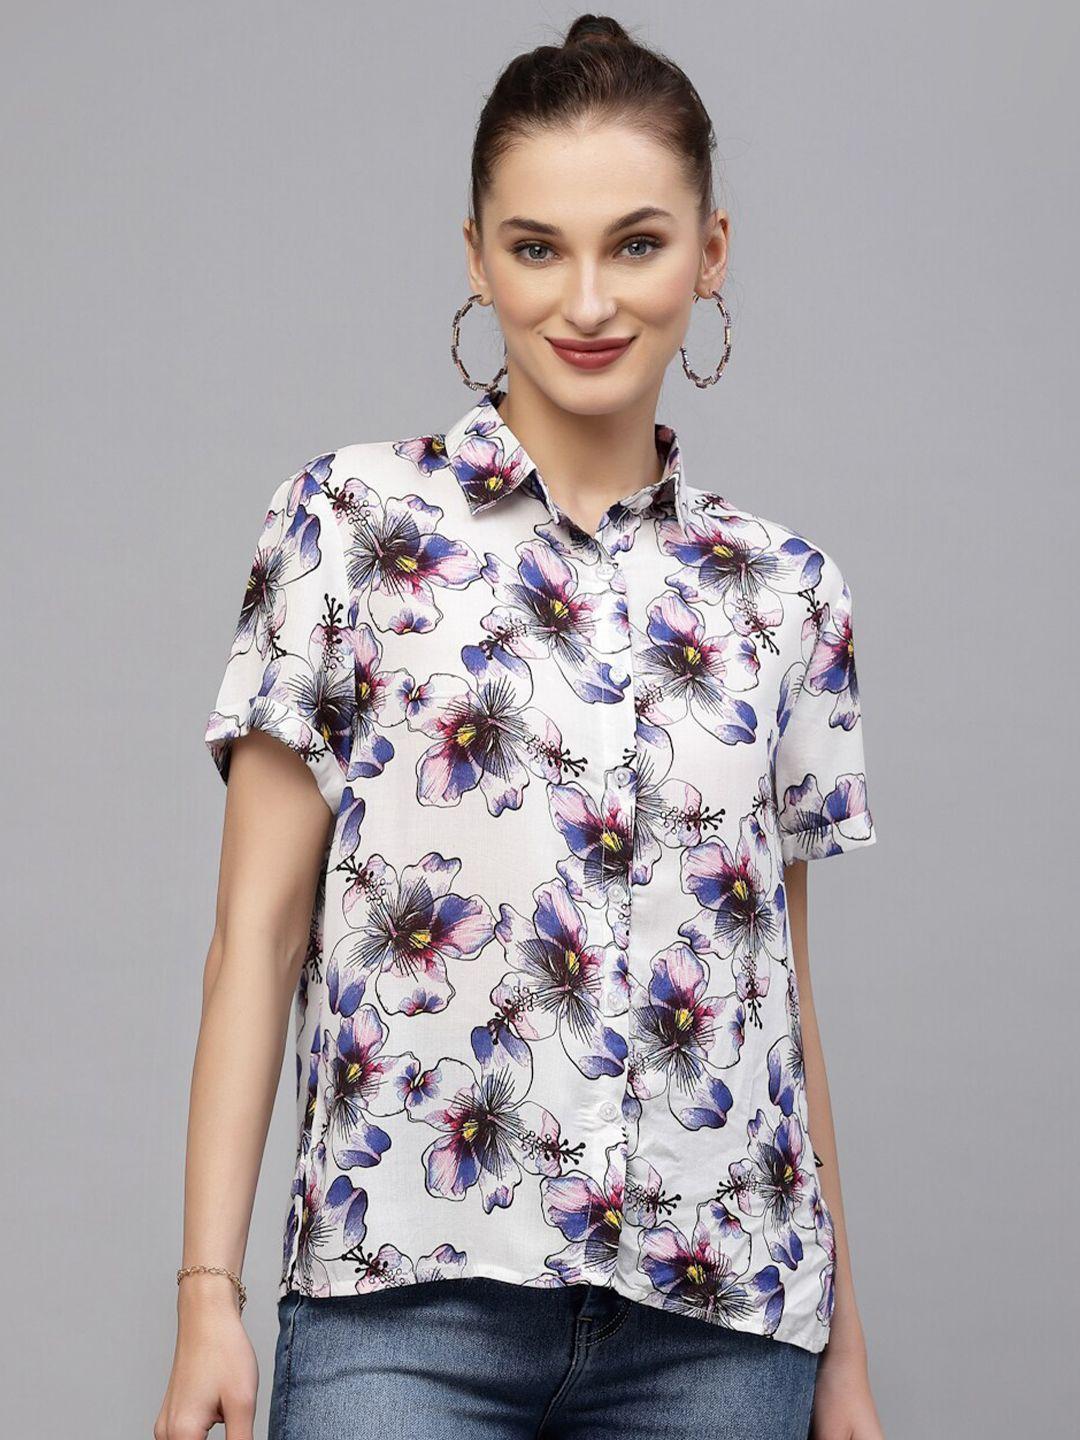 valbone women classic floral printed casual shirt